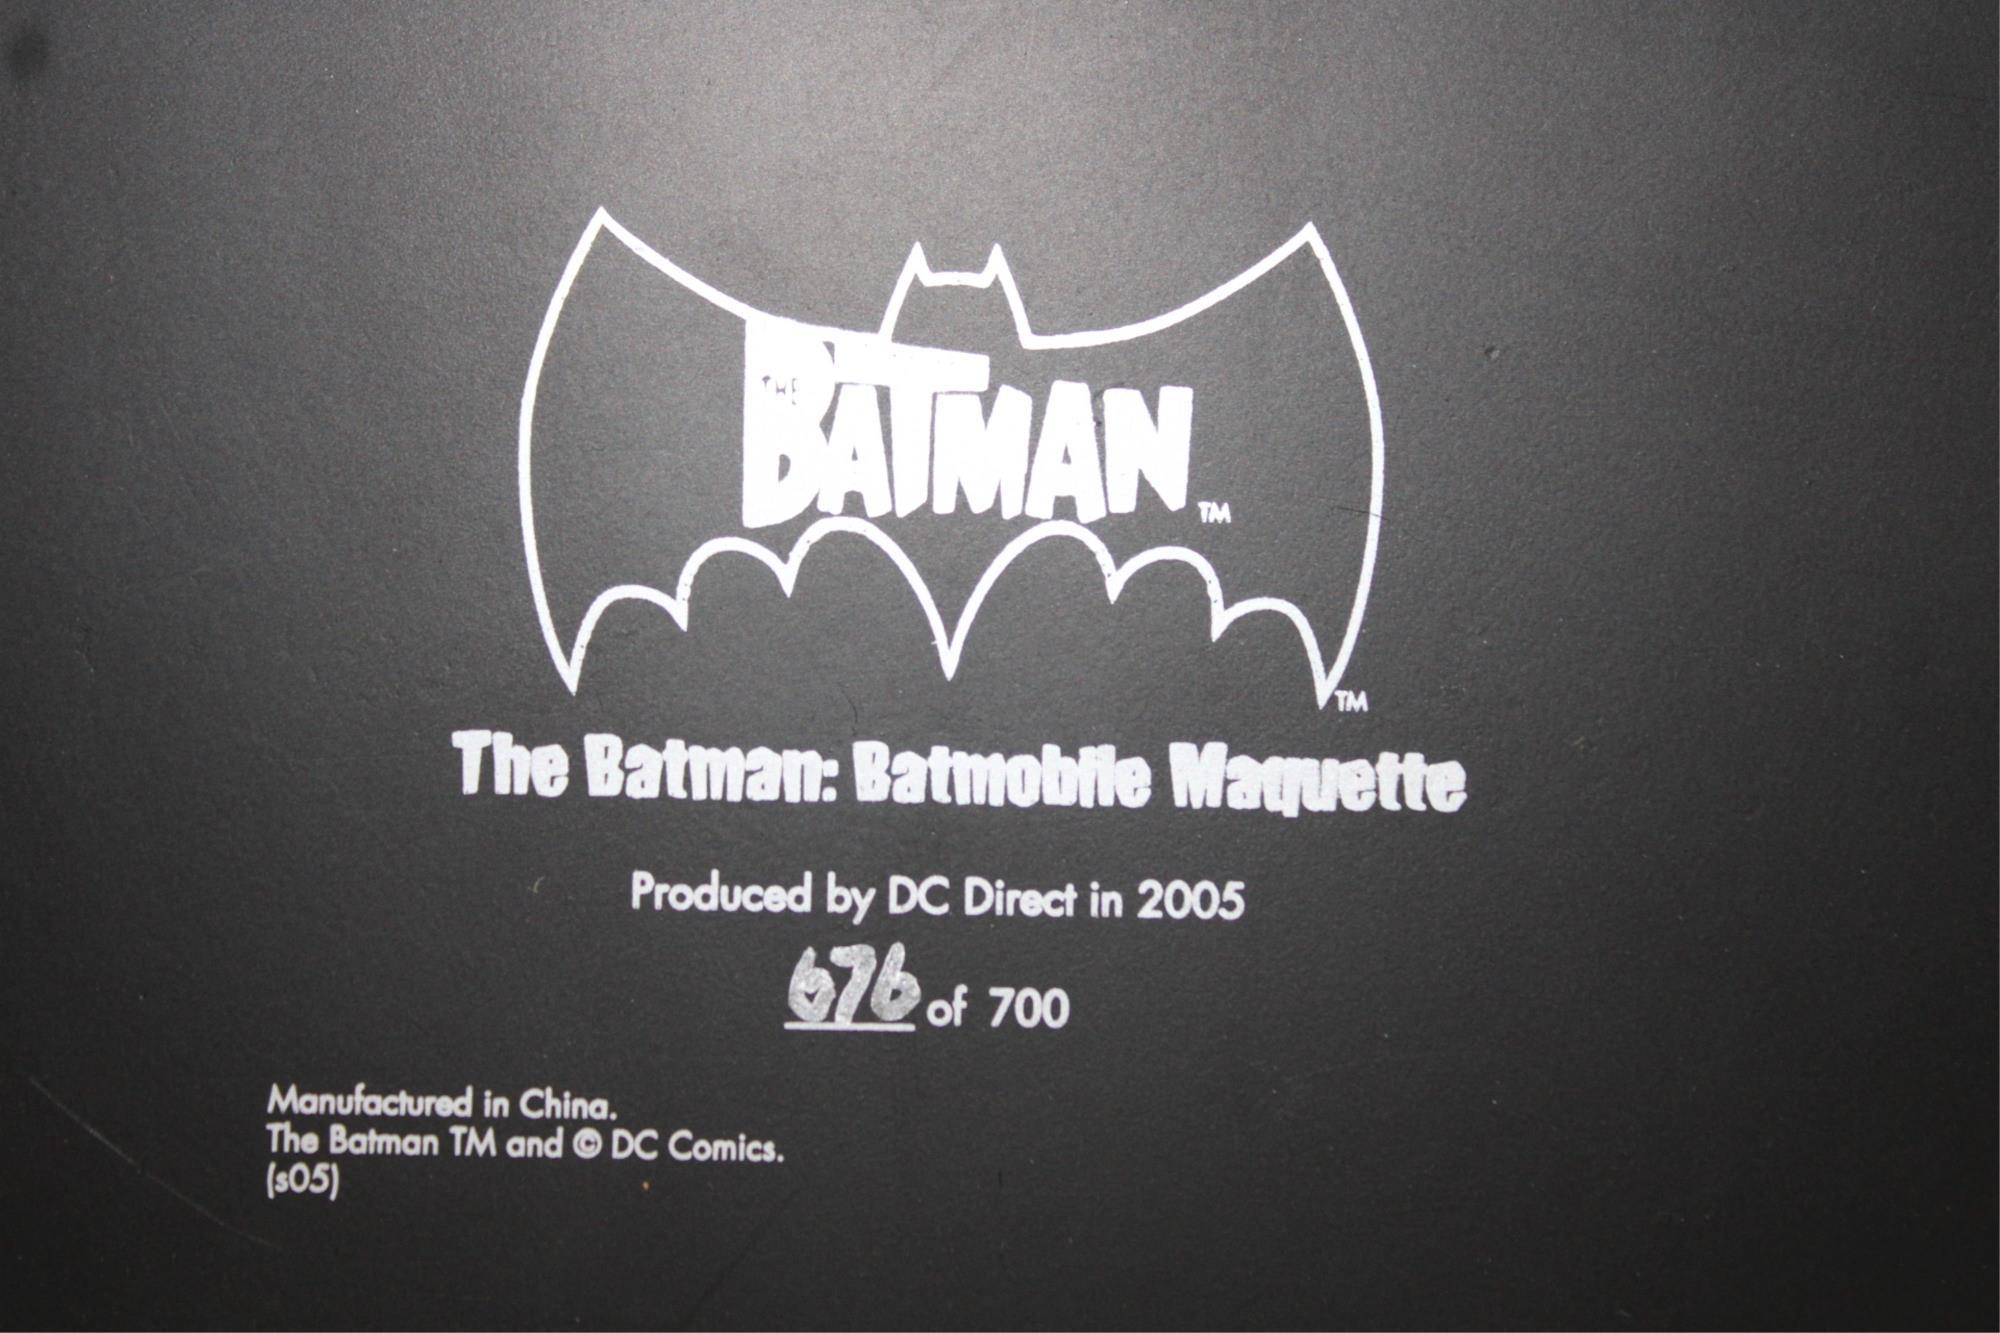 THE BATMAN: THE BATMOBILE MAQUETTE